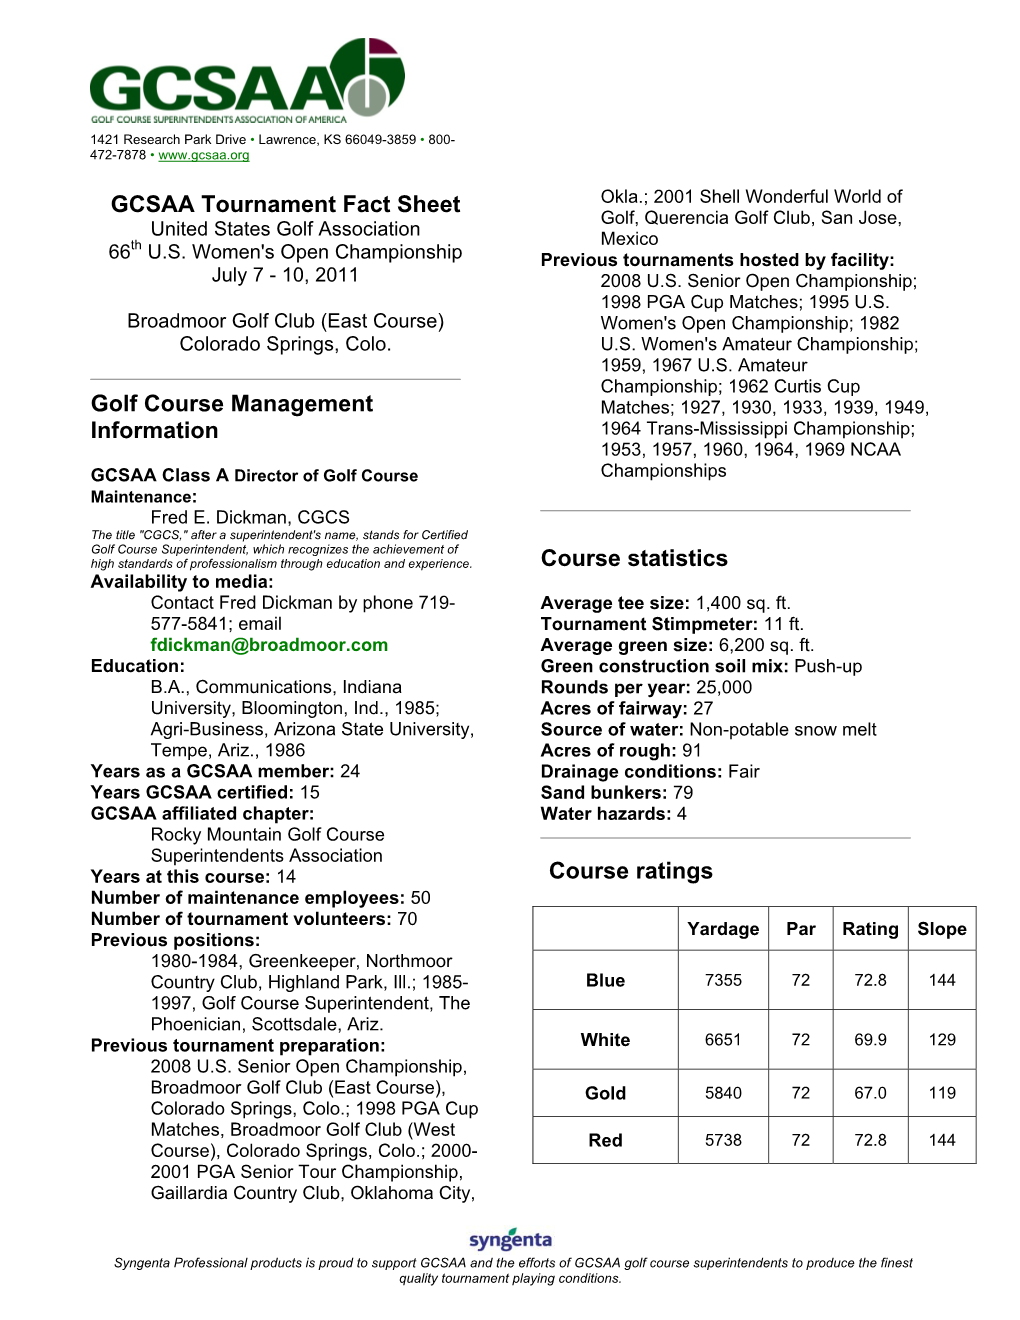 GCSAA Tournament Fact Sheet Golf Course Management Information Course Statistics Course Ratings